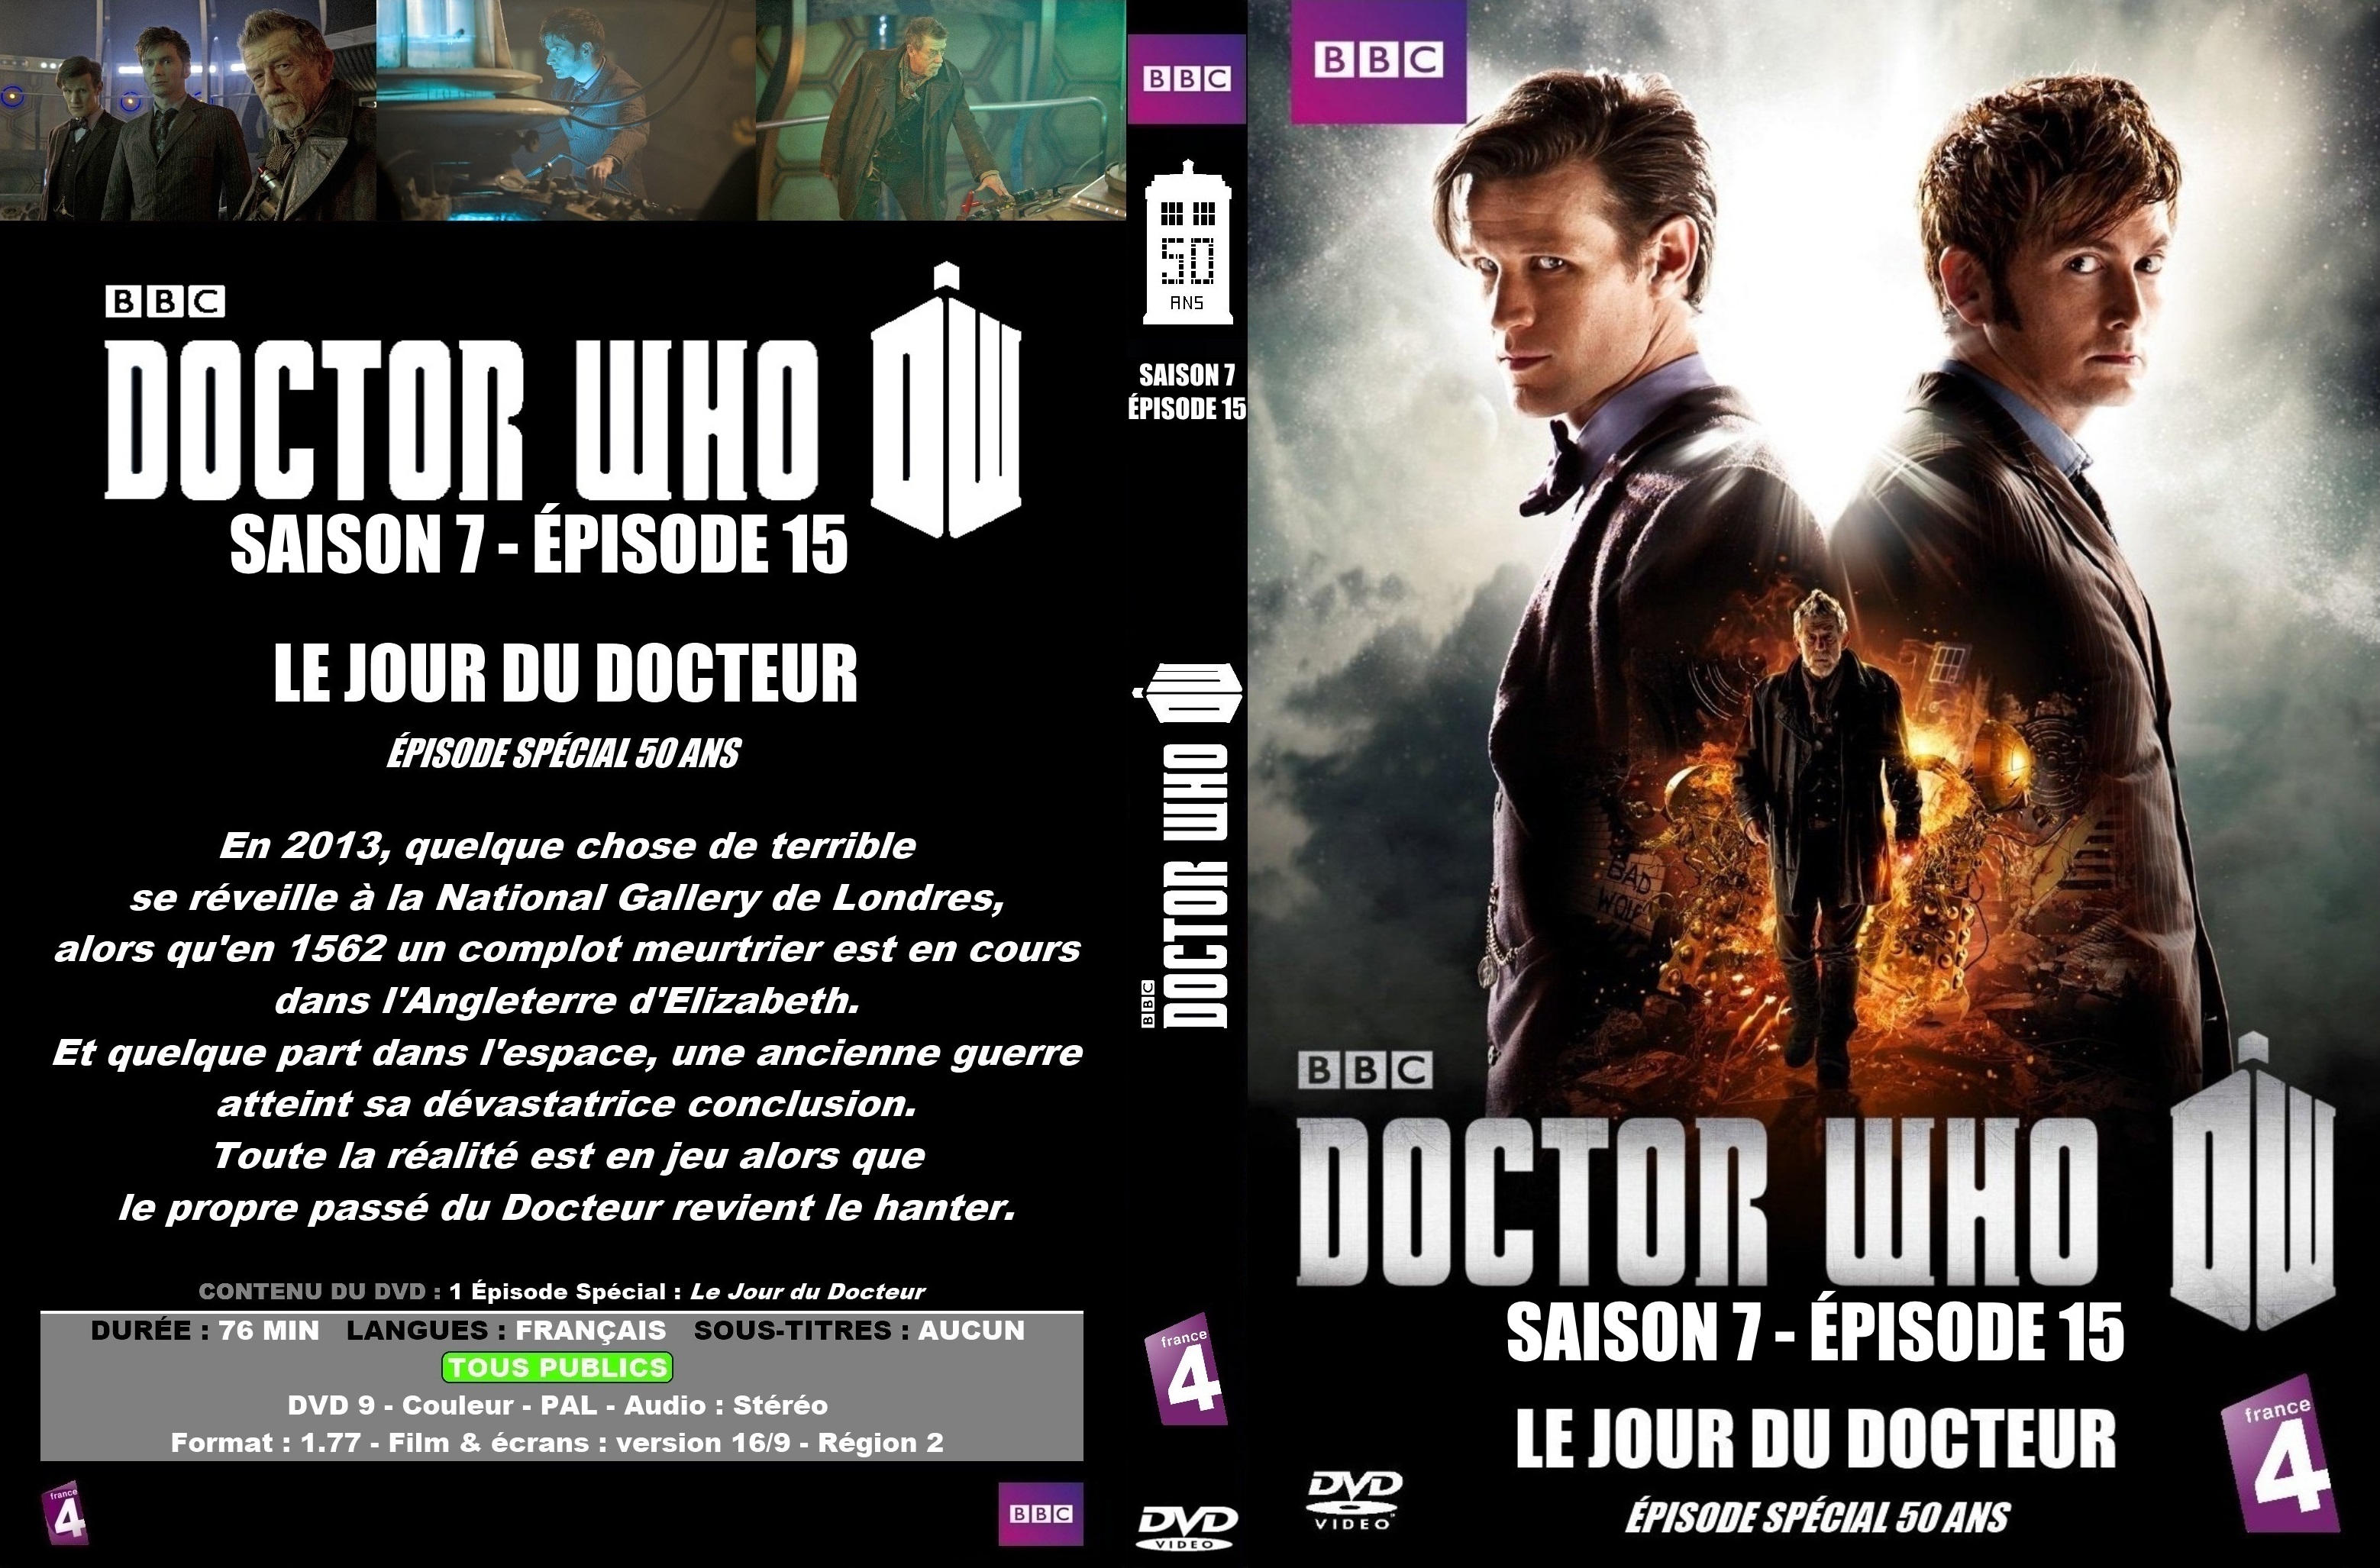 Jaquette DVD Doctor Who Saison 7 Episode 15 custom